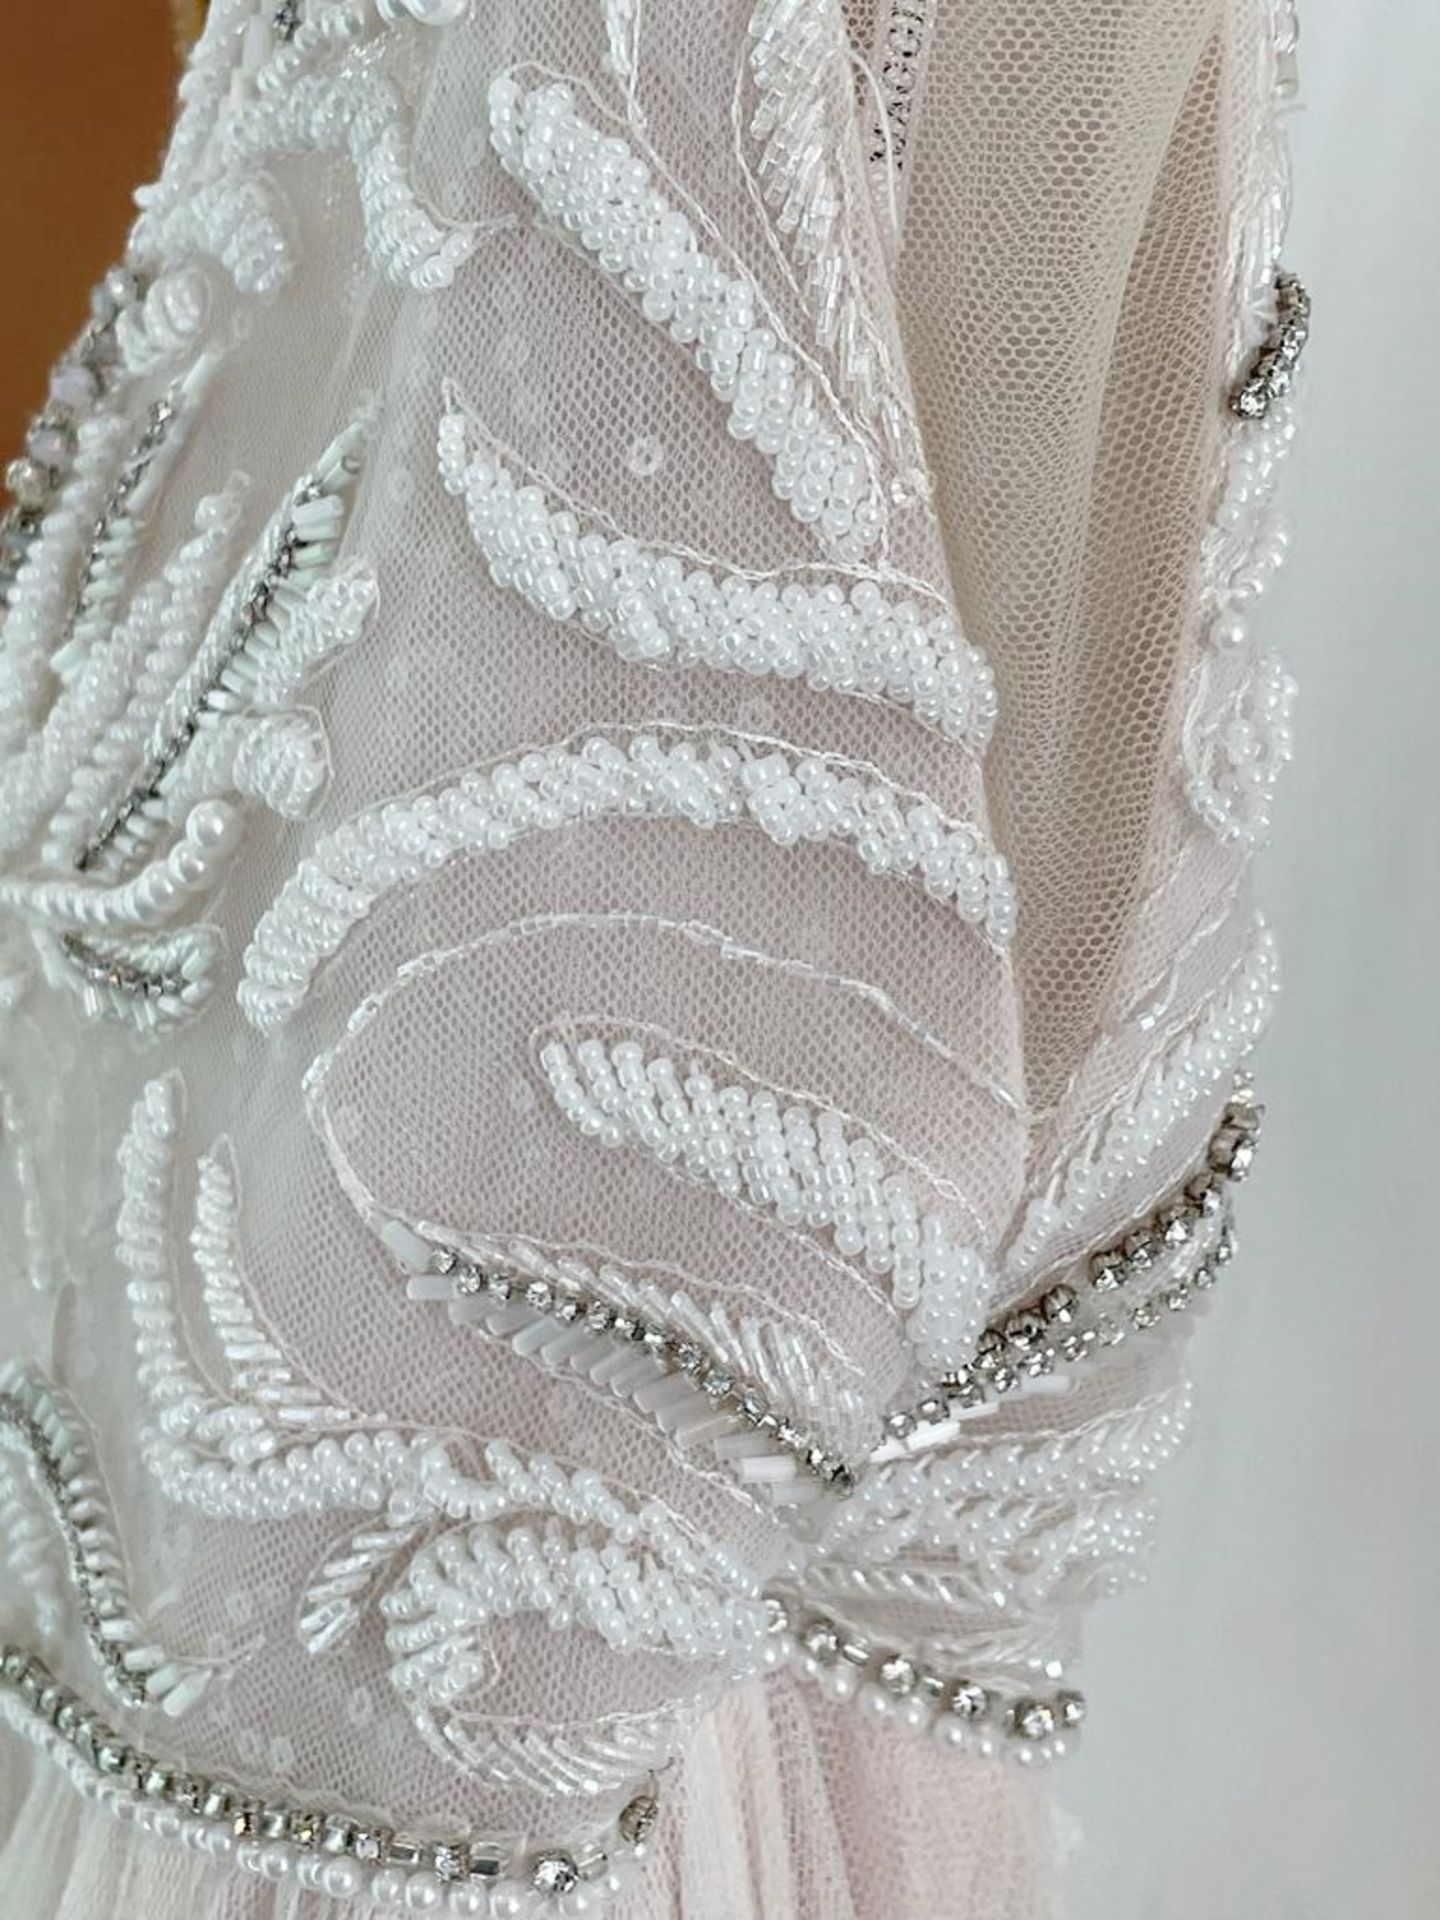 1 x MAGGIE SOTTERO 'Charlene' Boho-Style Aline Designer Wedding Dress Bridal Gown - RRP £1,900 - Image 2 of 15